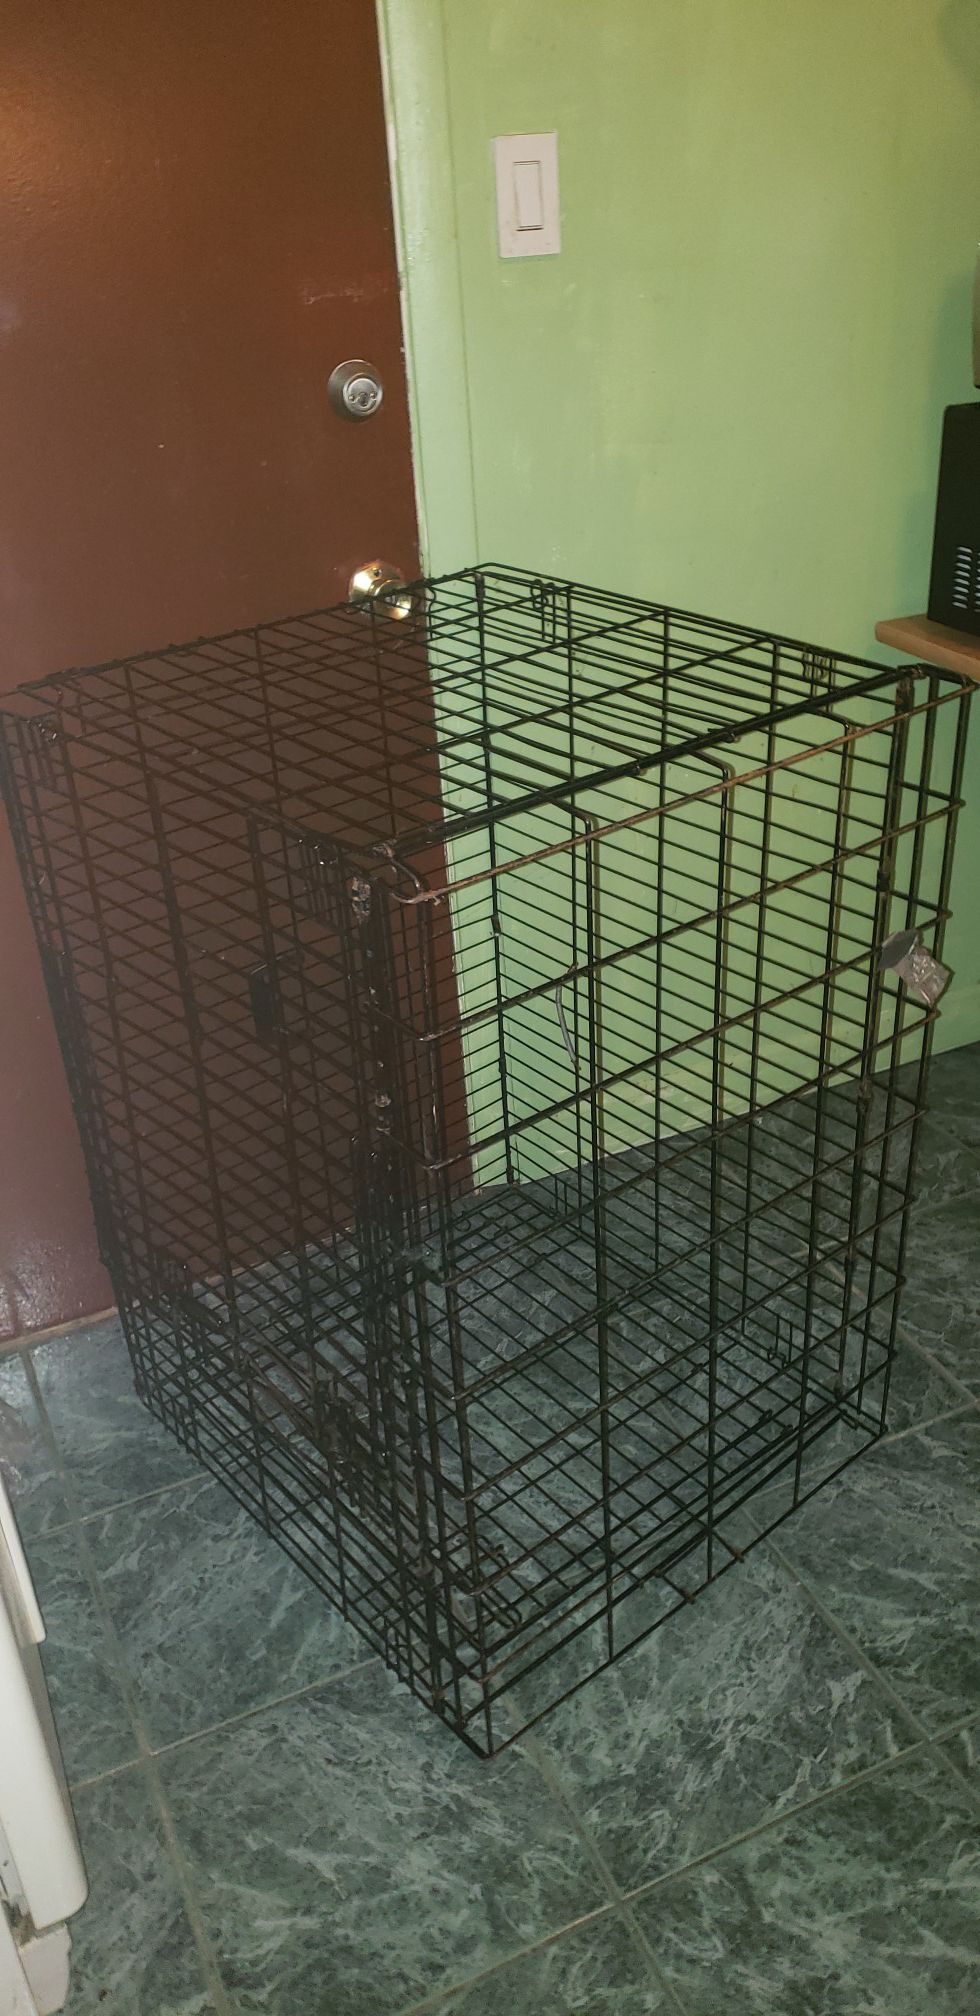 Big dog cage